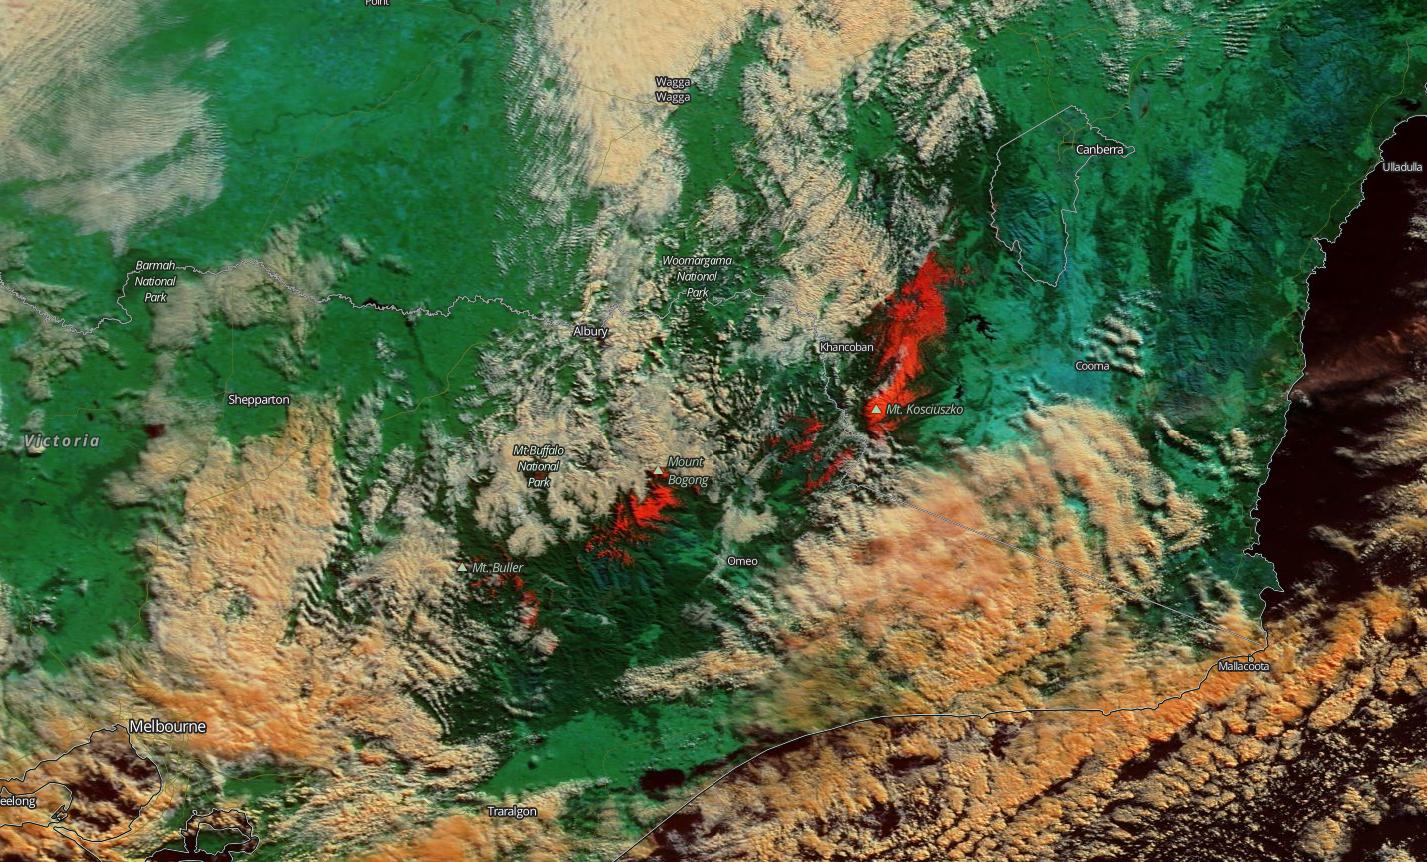 Satellite images show snowier ground in Australia's alps